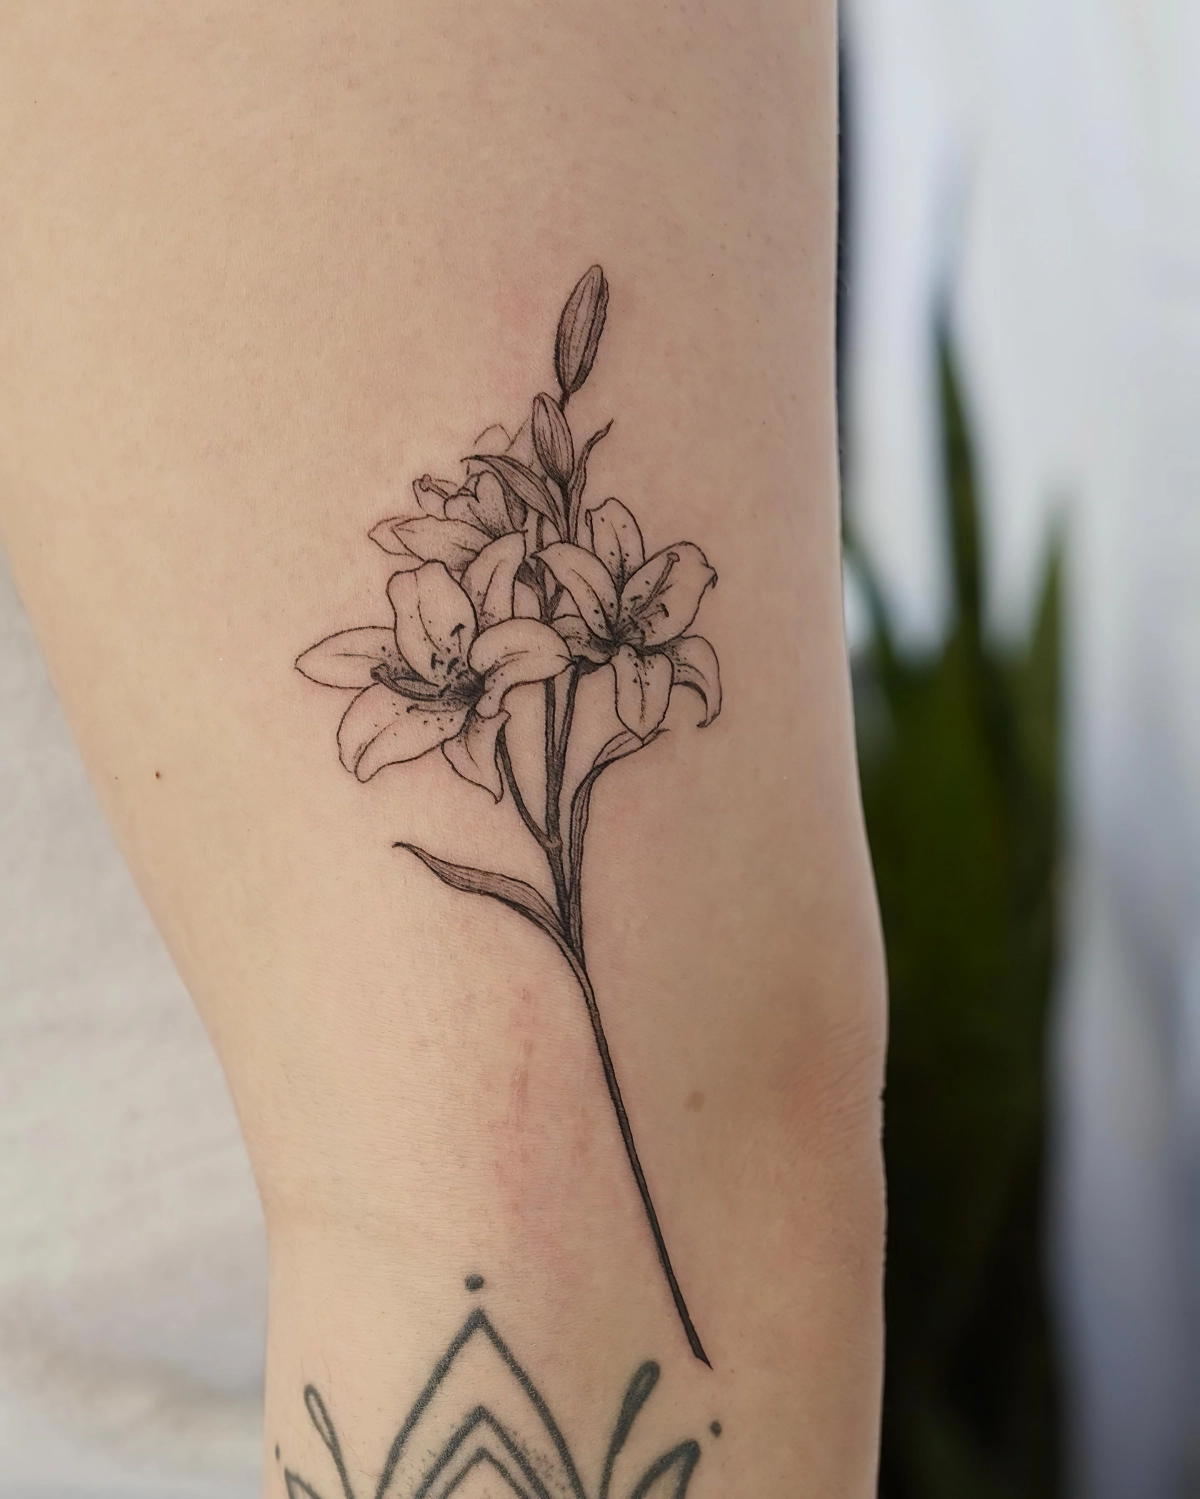 tatouage femme tiges fleurs lys tatouage bras dessin art corporel design